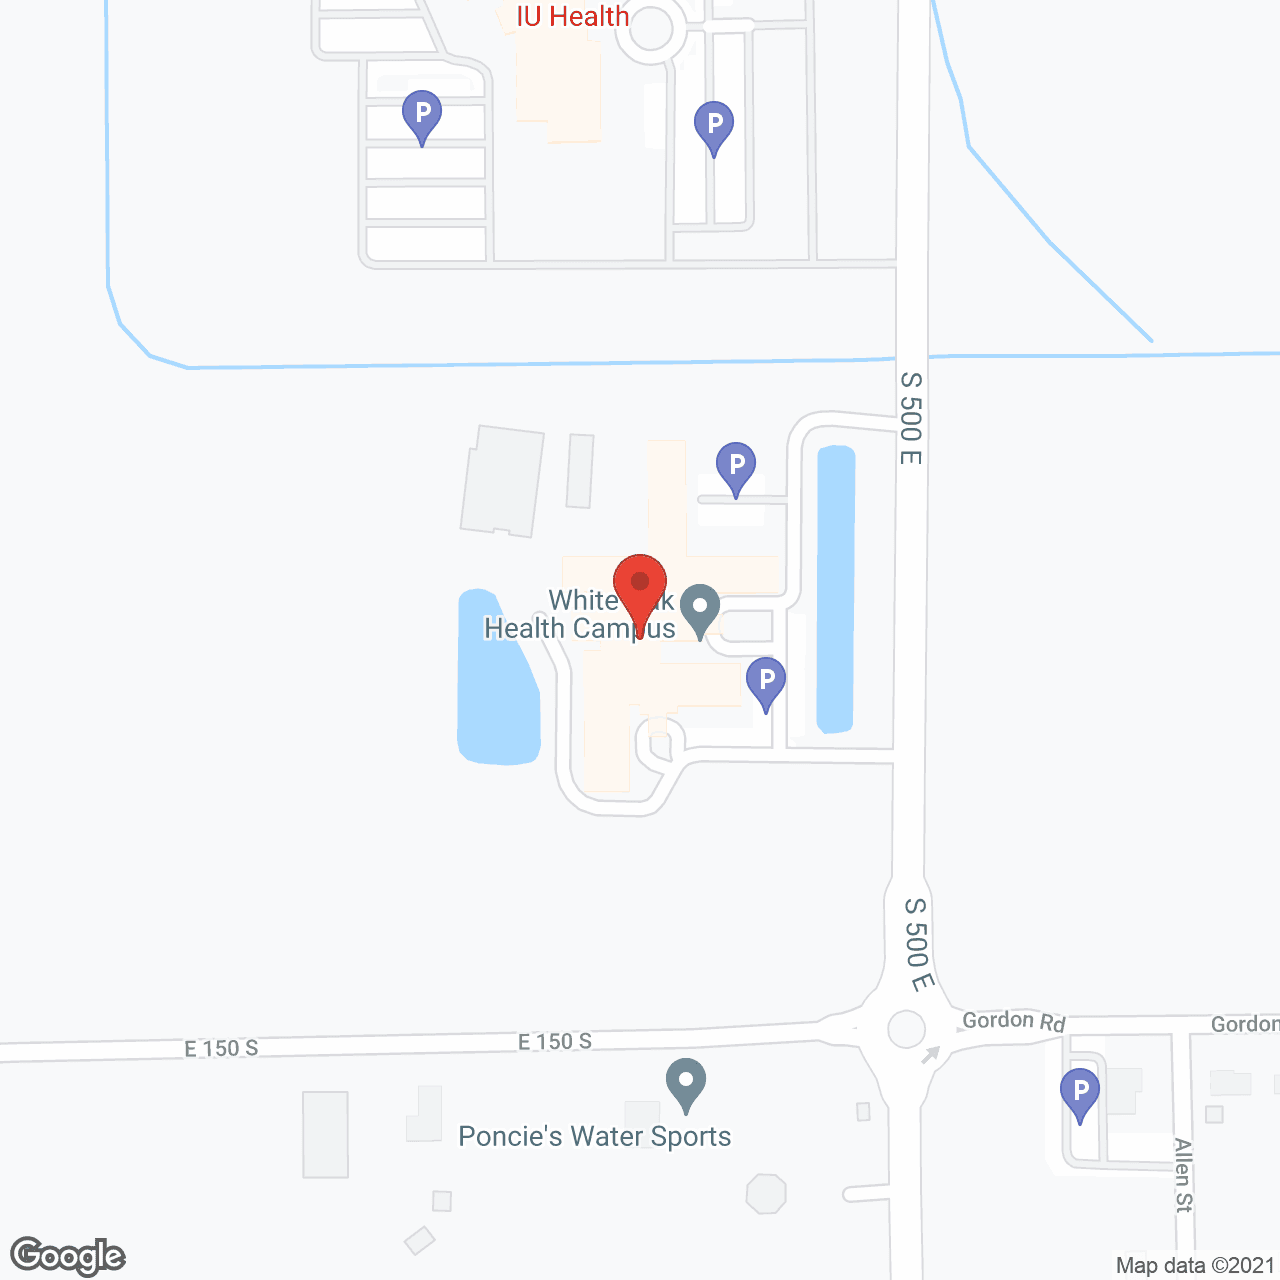 White Oak Health Campus in google map